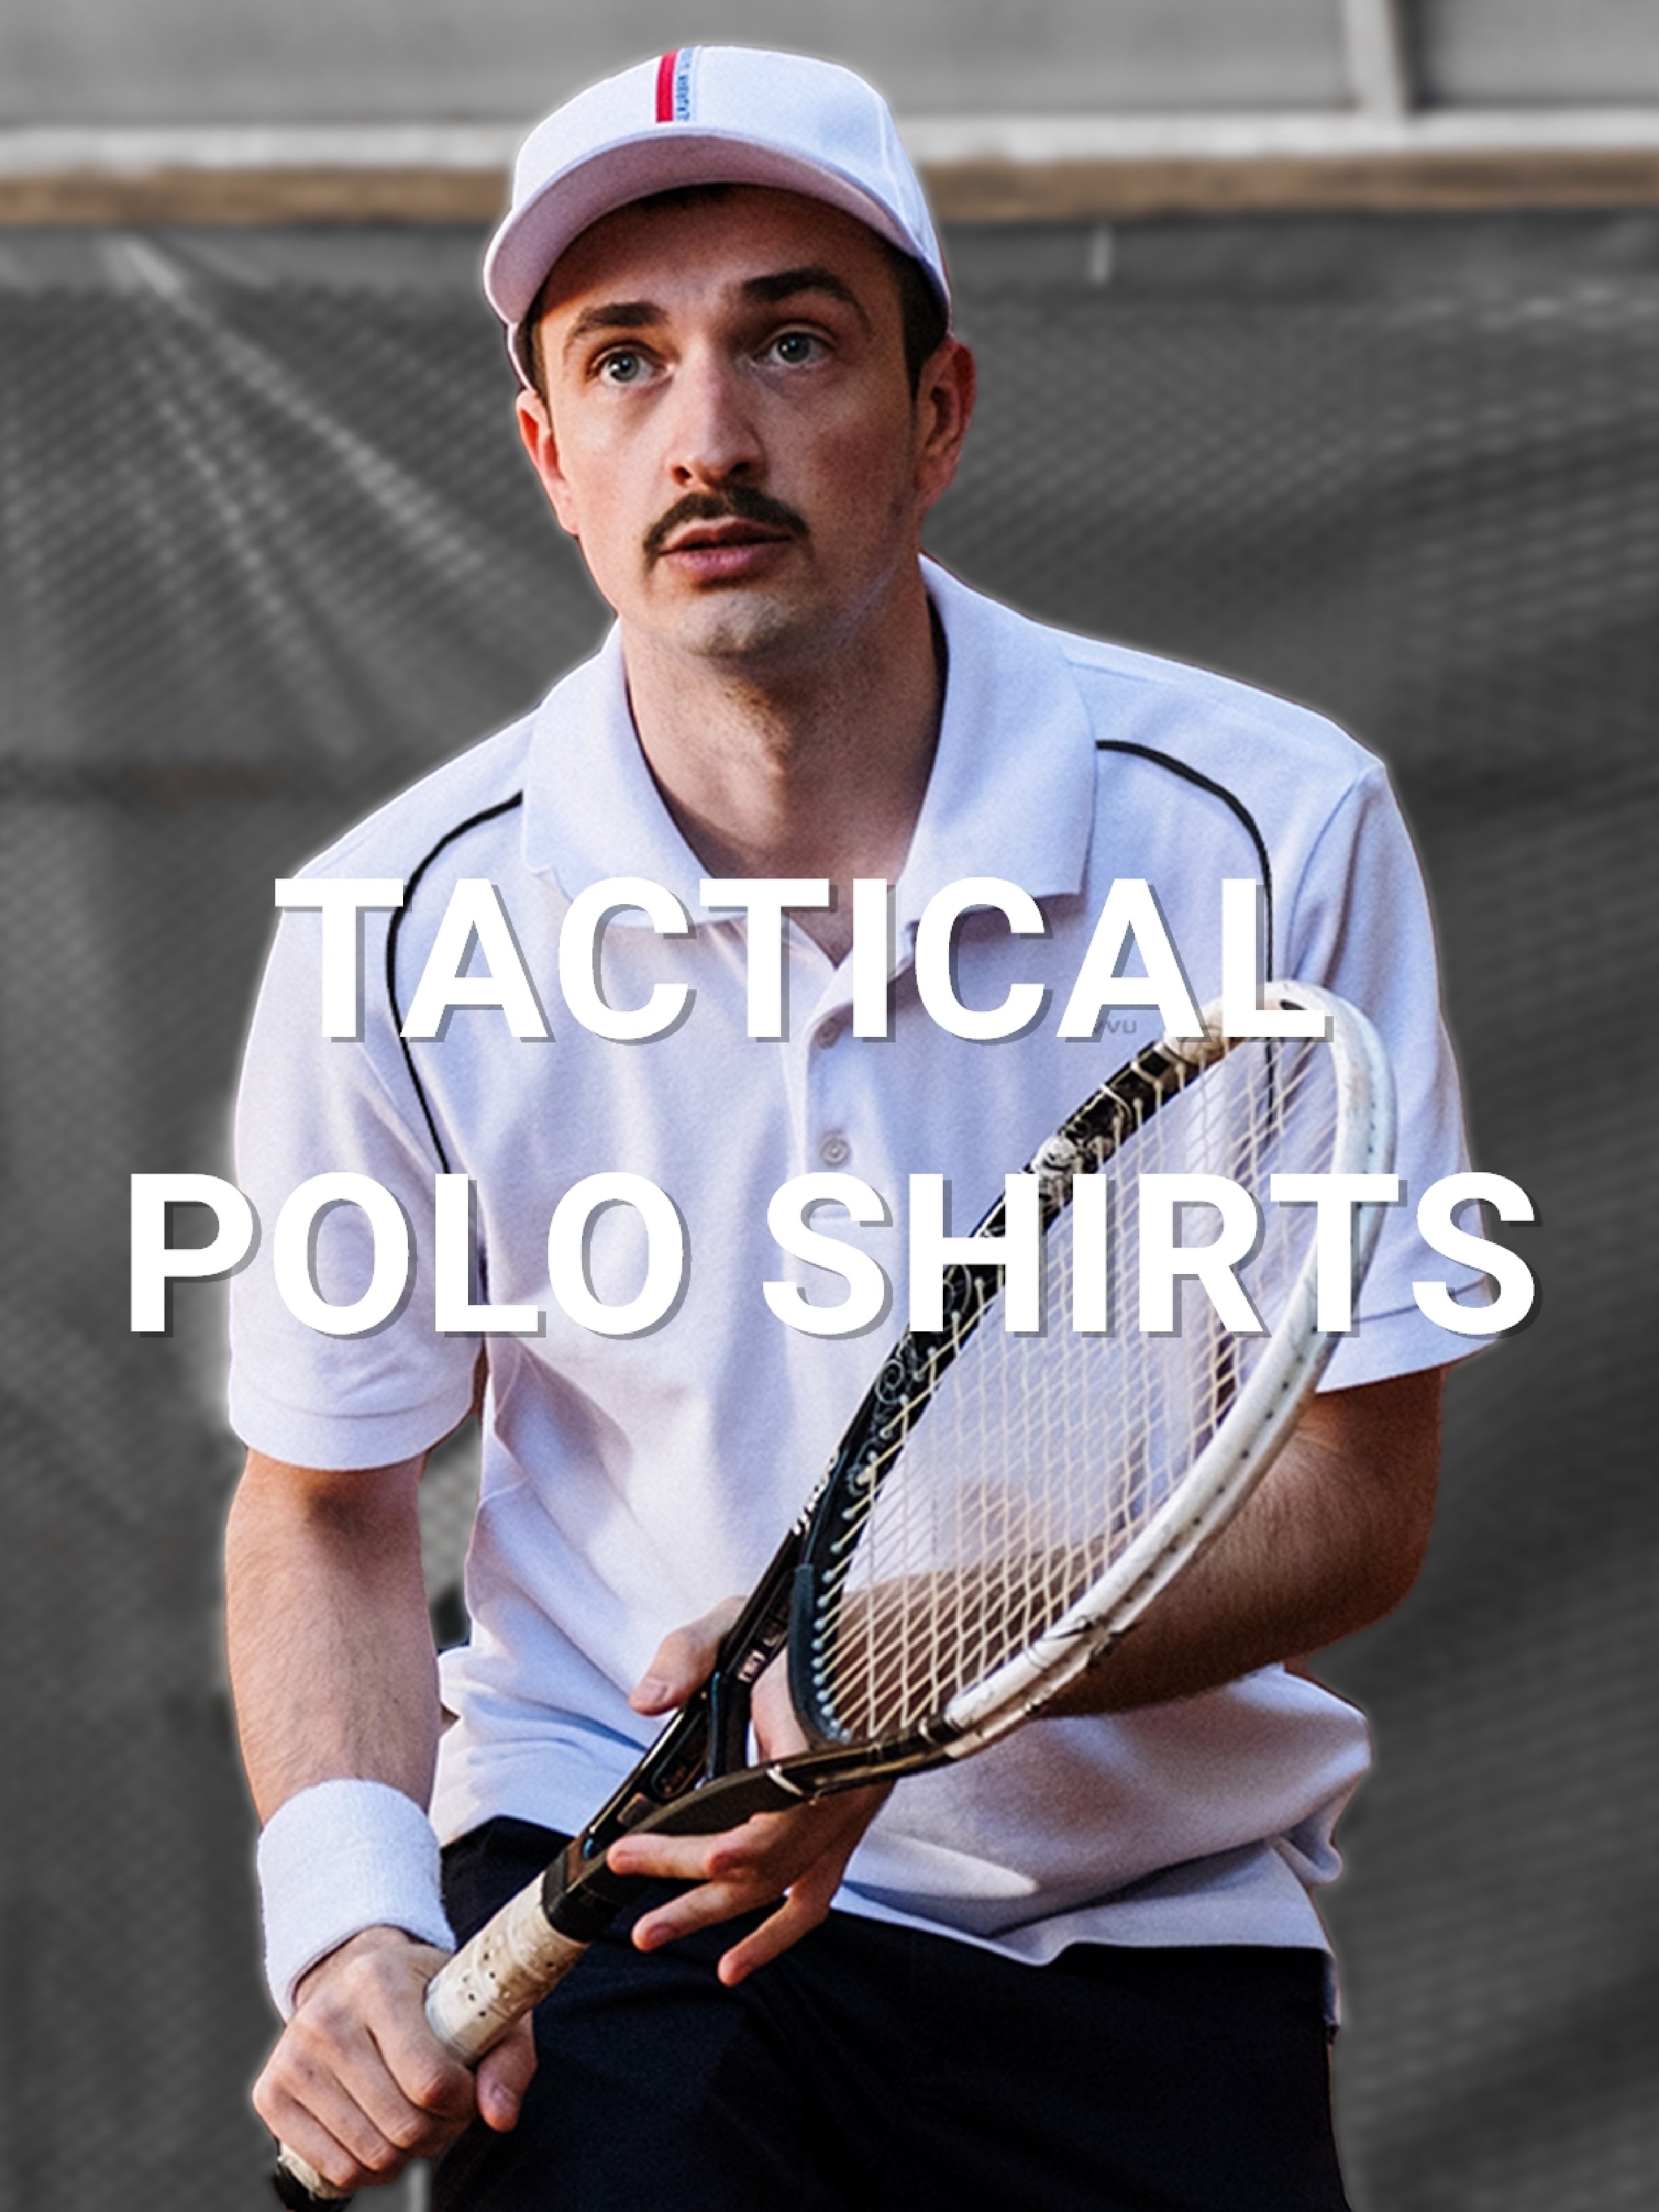 BVVU Mens Outdoor Polo Shirt Long Short Sleeves Performance Tactical Golf T-Shirts Moisture Wicking Collared Tennis Tees